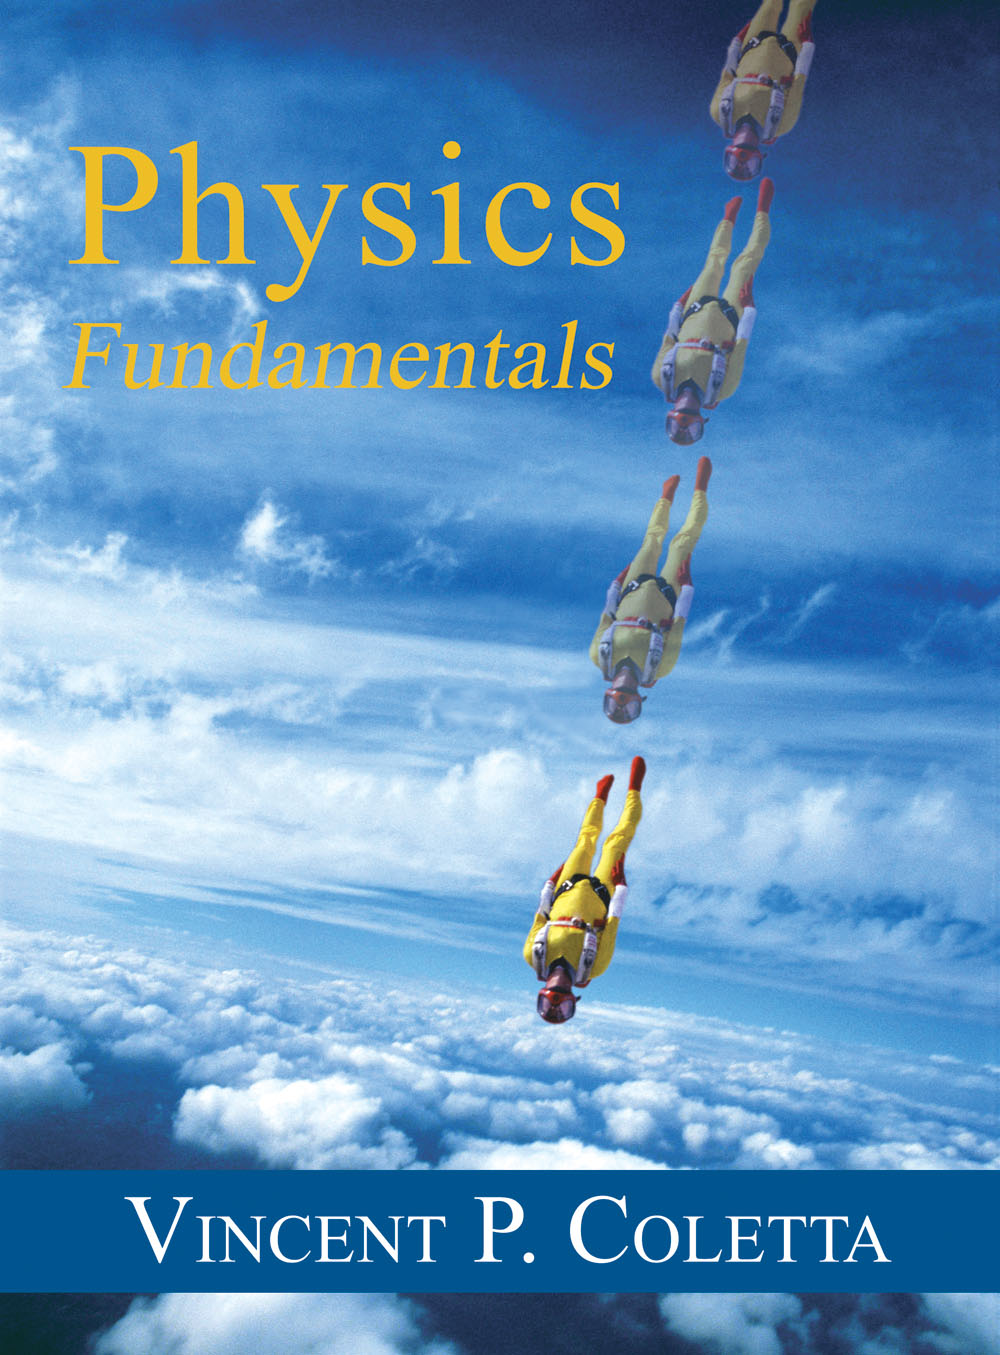 Physics Textbook, Physics Fundamentals by Coletta